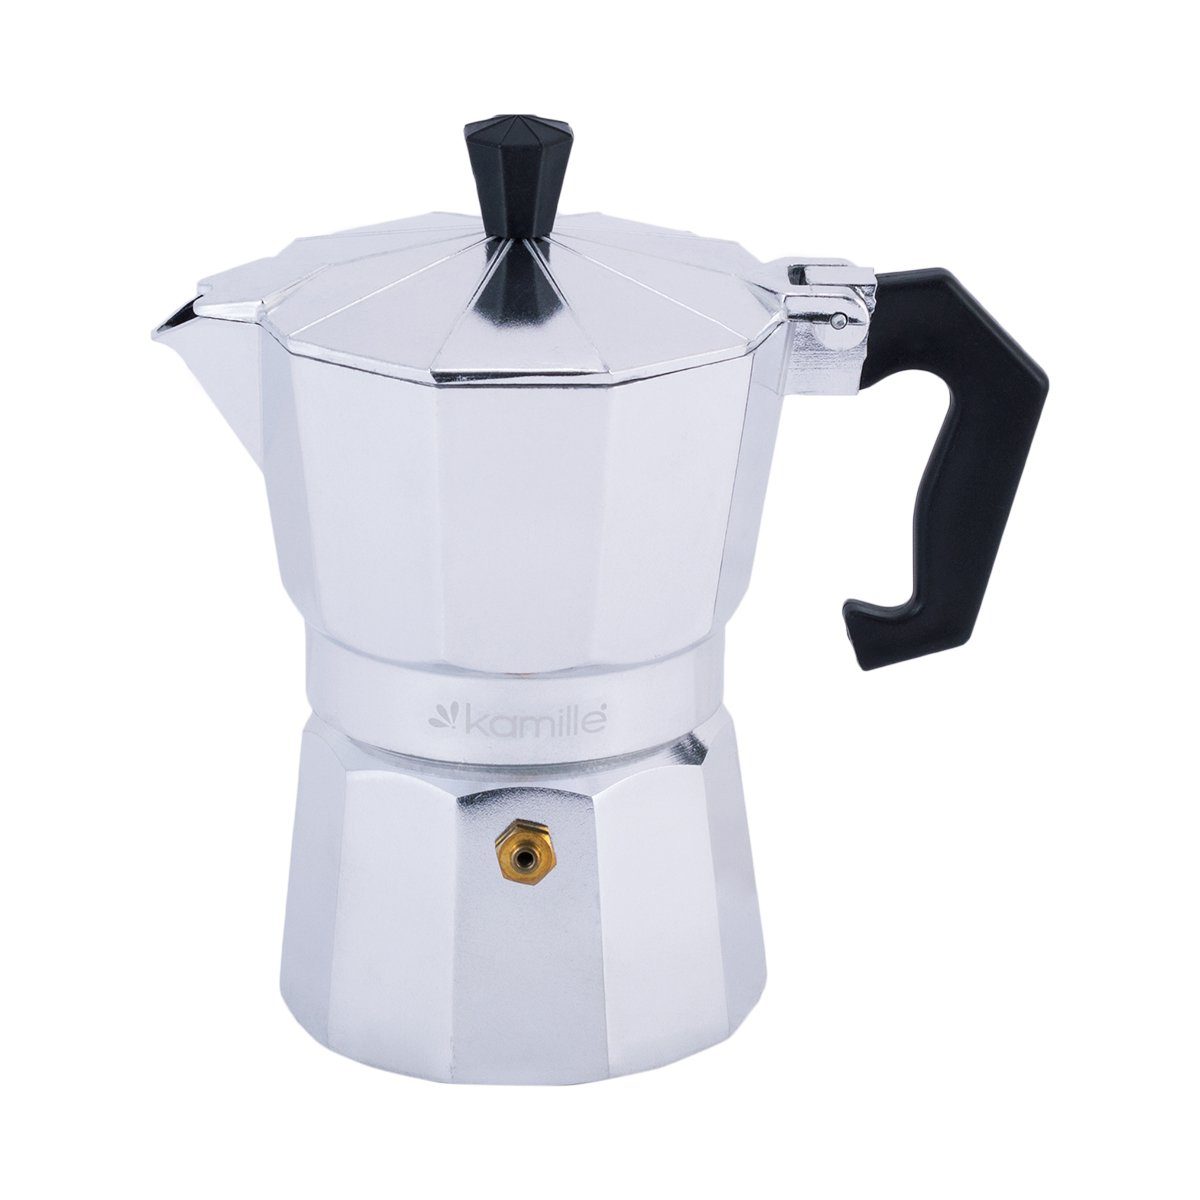 Espressokocher Kaffeekocher Espressokocher Kaffeekanne Kamille ml 150